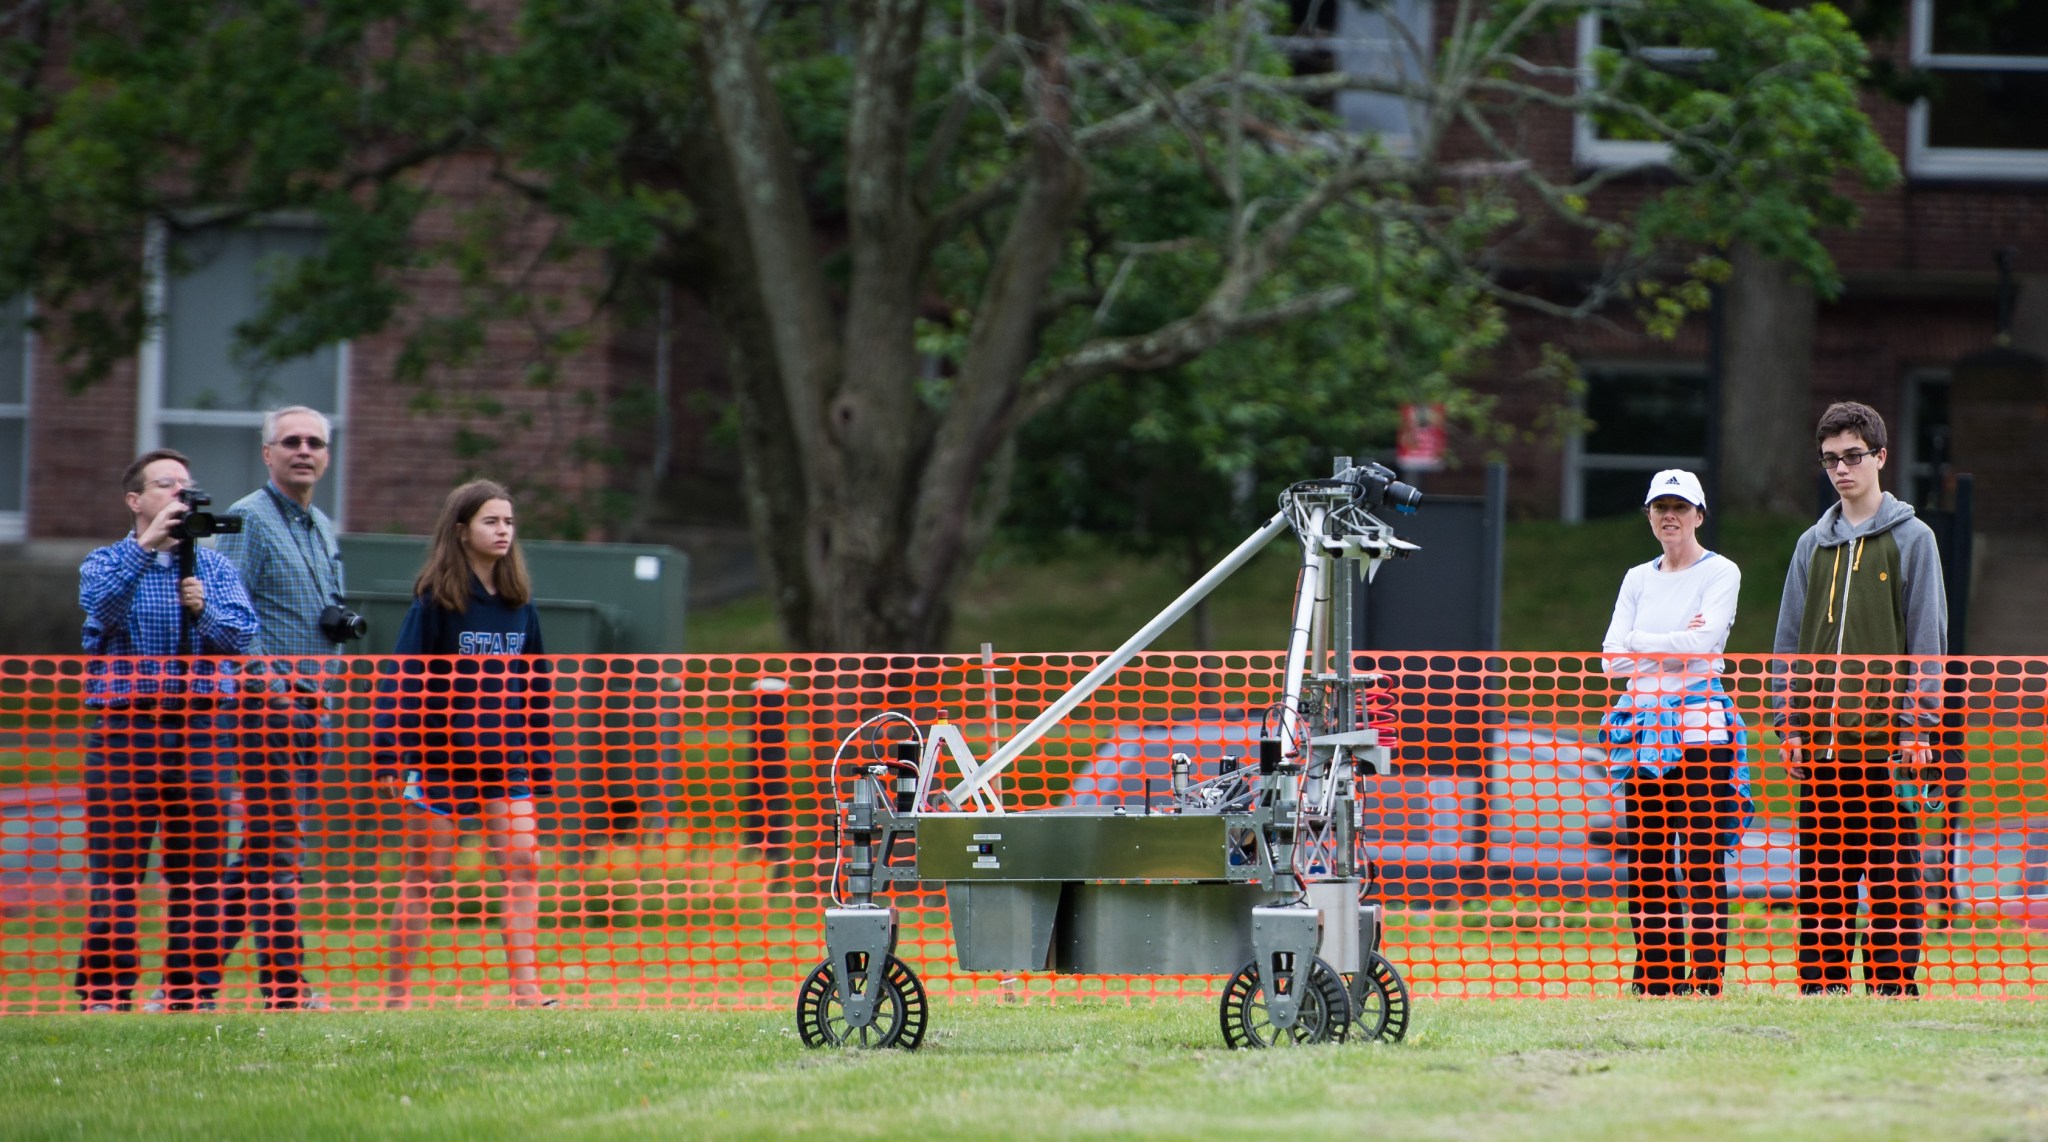 Los Angeles team Survey's robot at the 2014 NASA Centennial Challenges Sample Return Robot Challenge